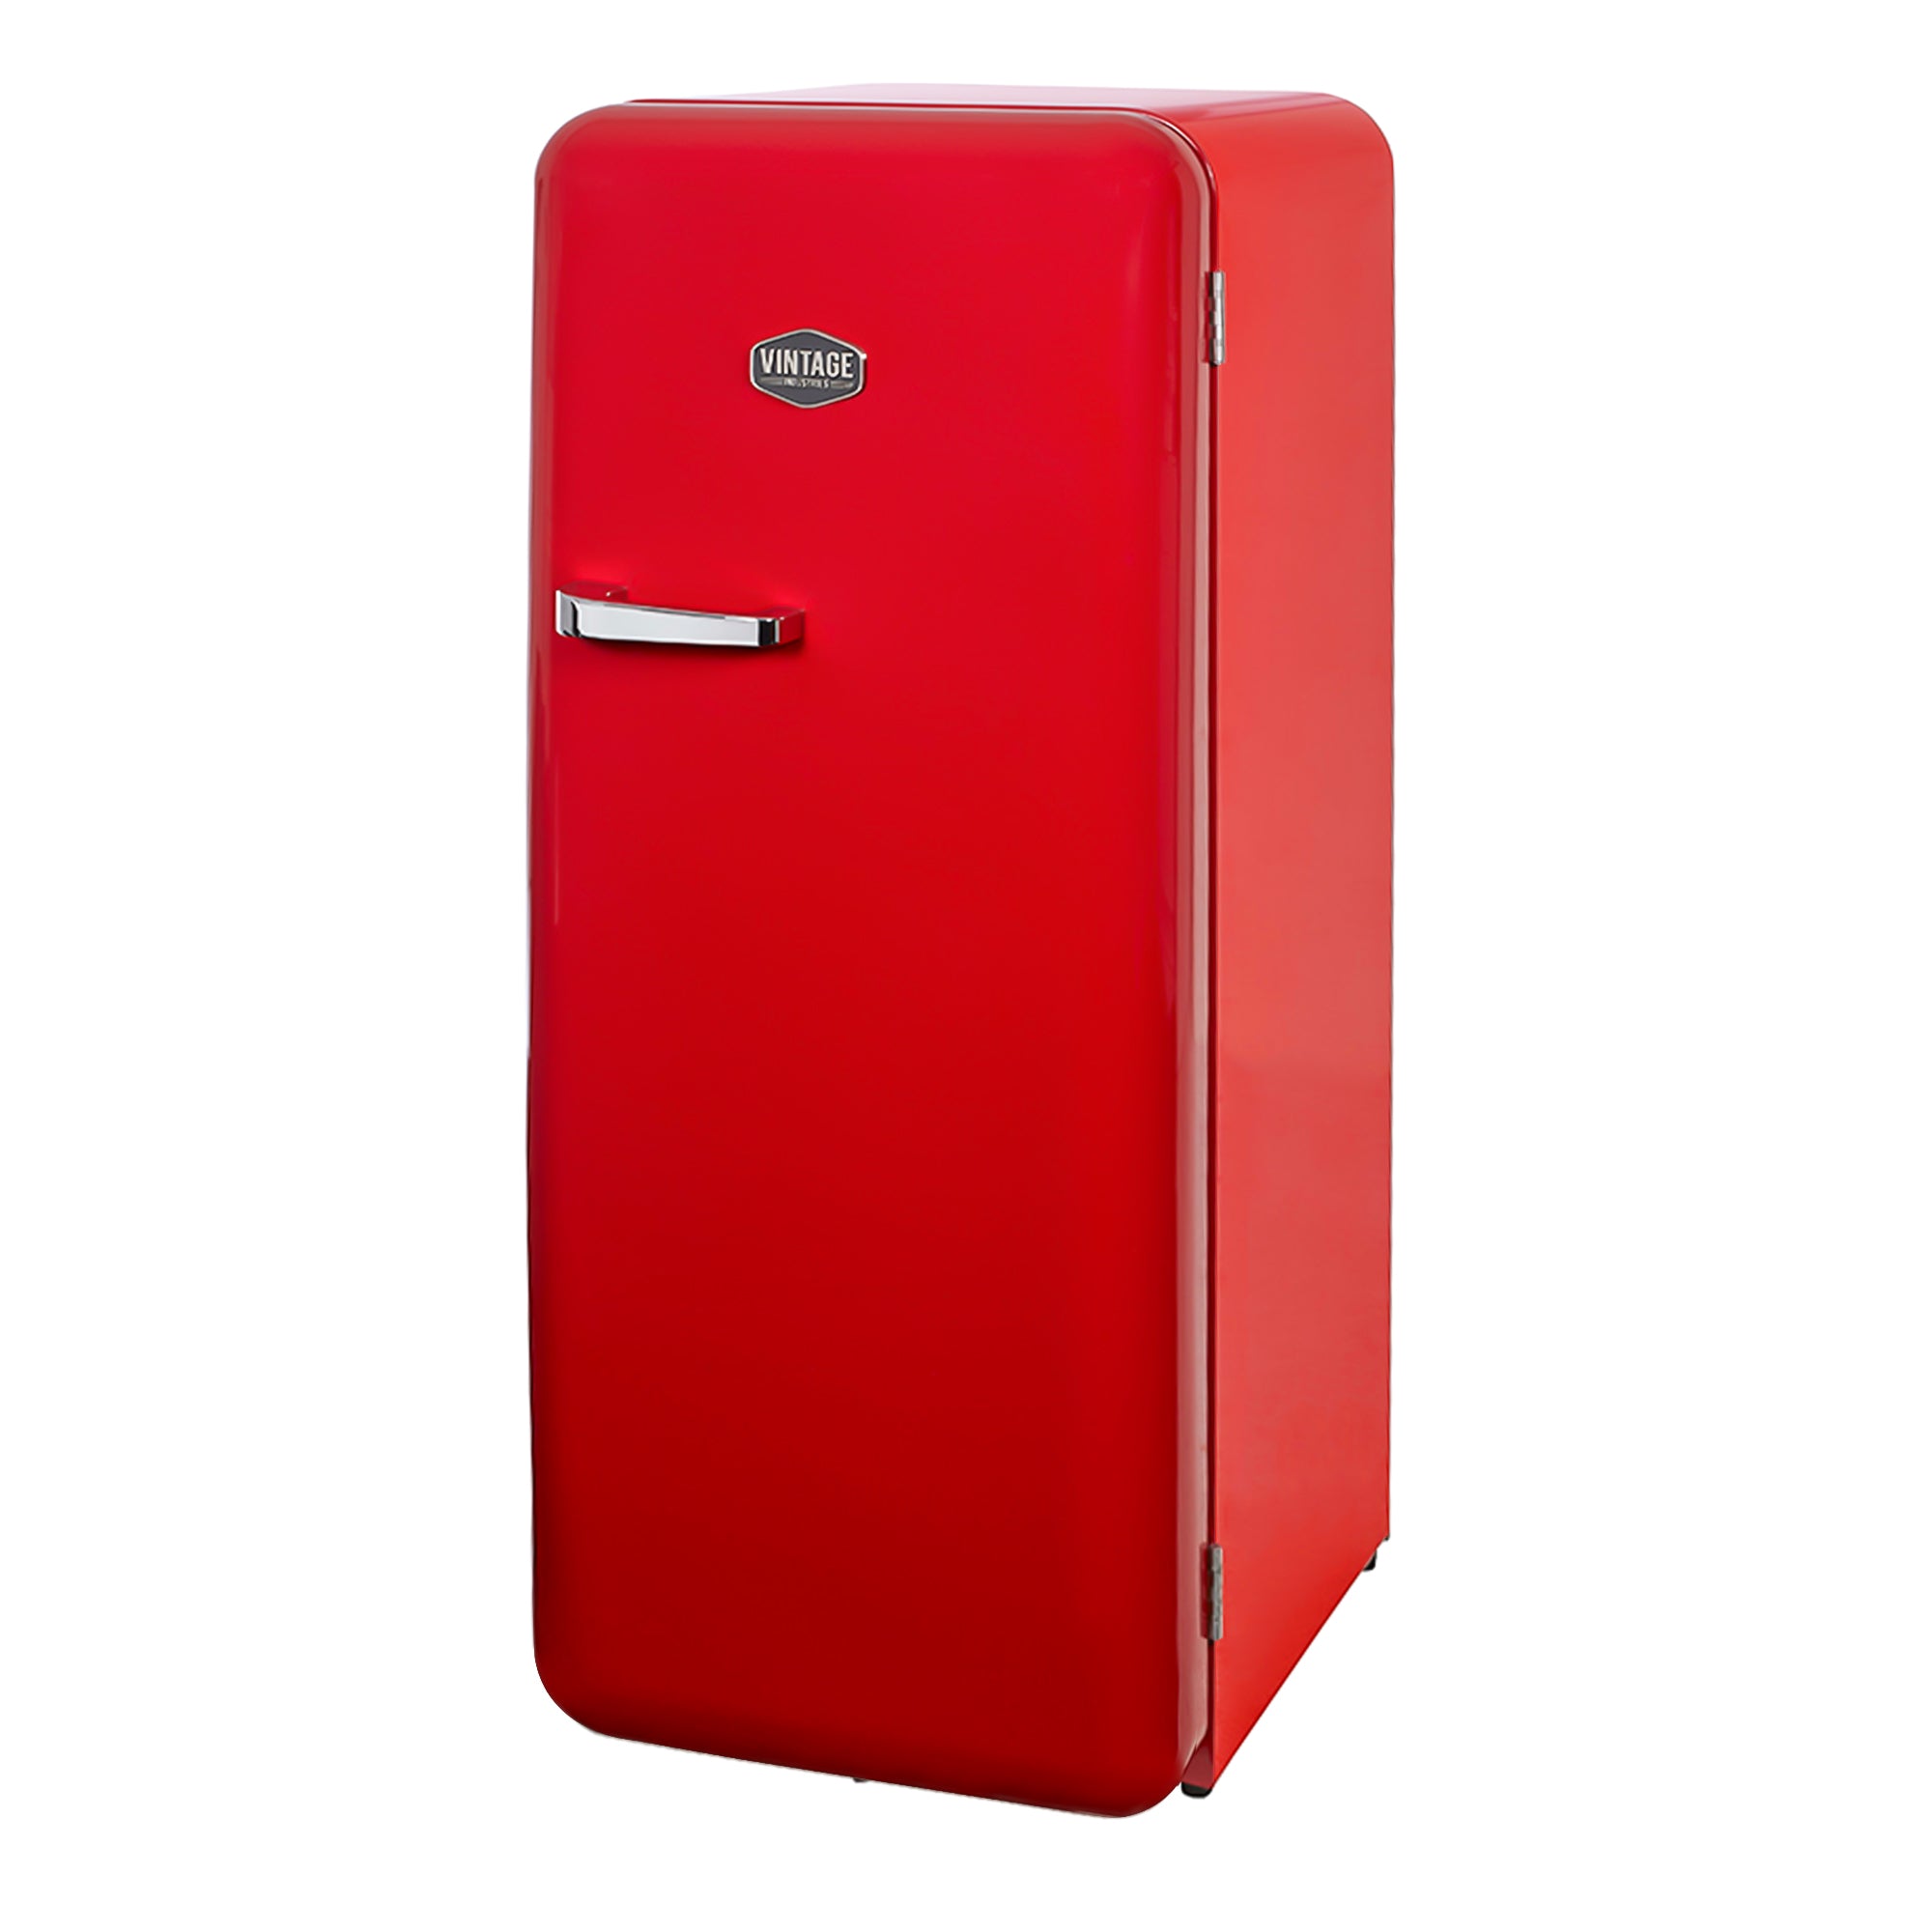 Retro køleskab - rød